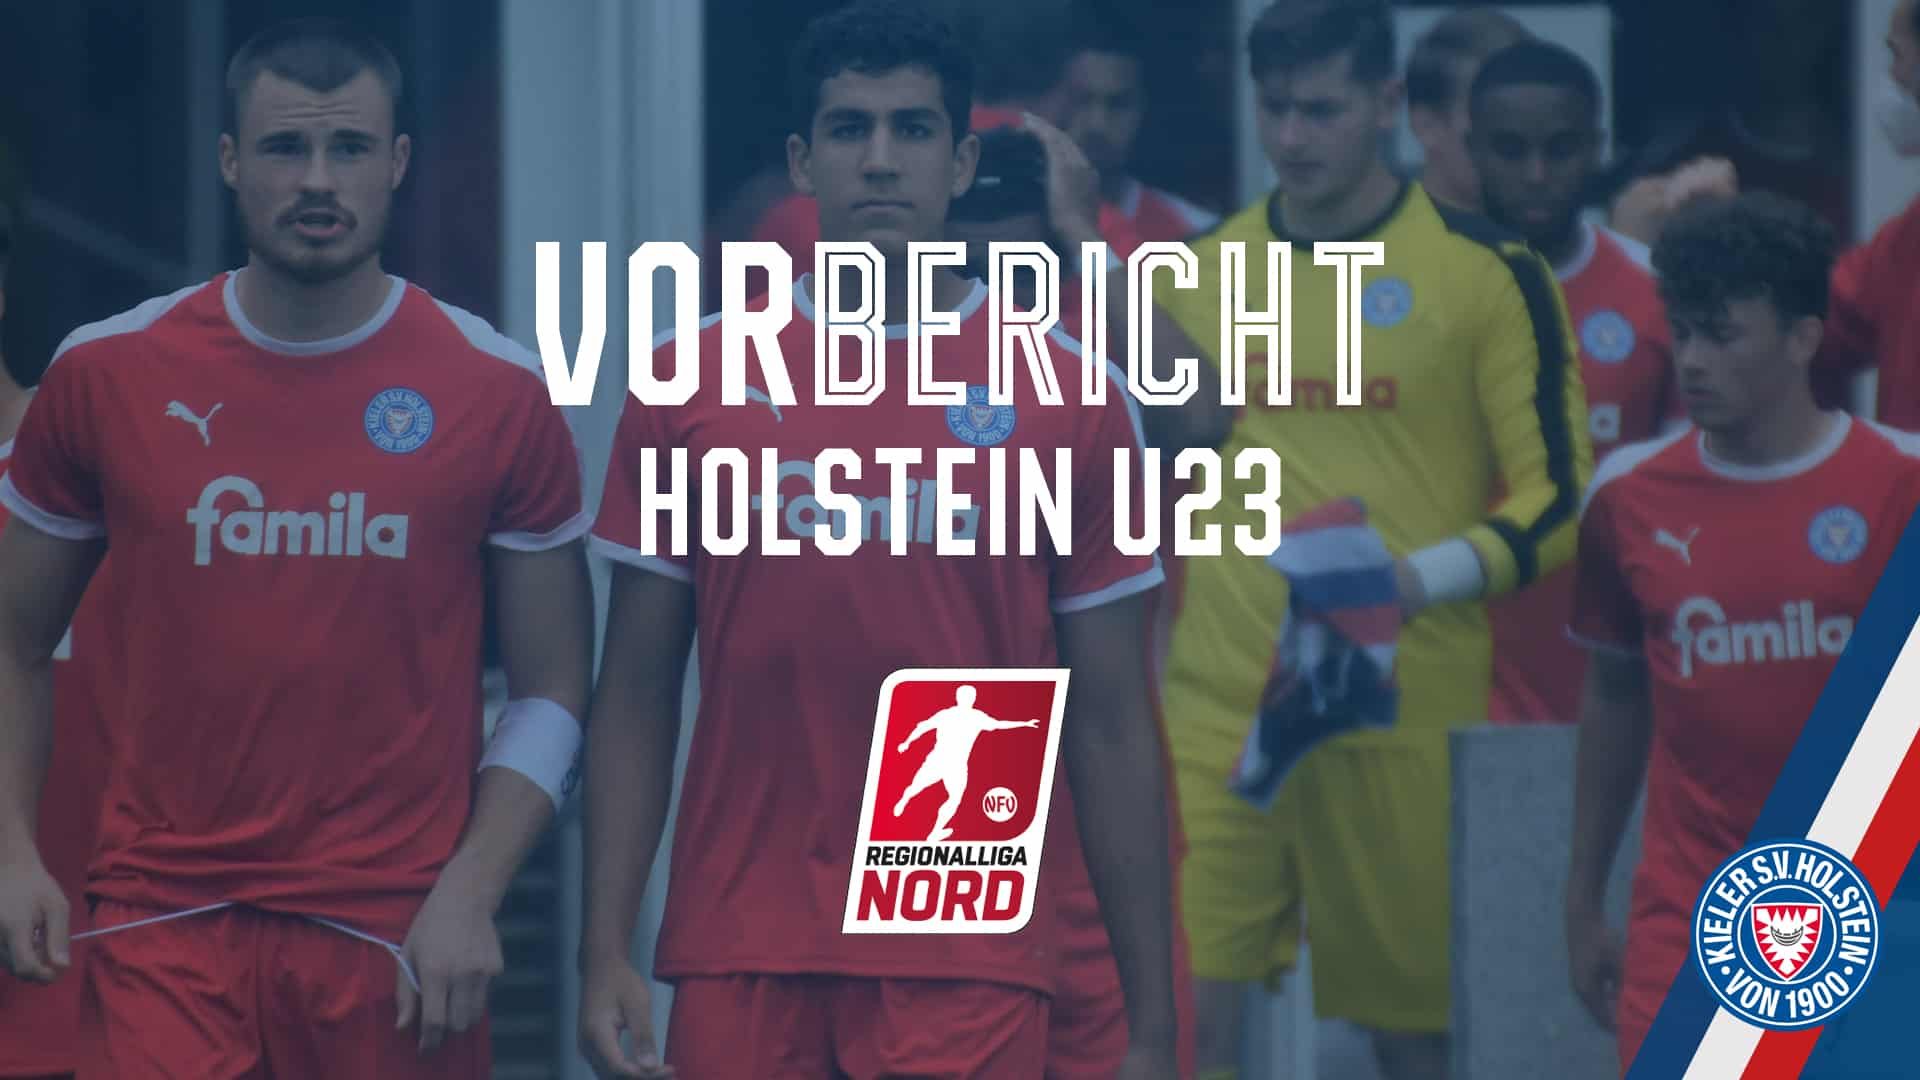 20210831 Vorbericht_U23 - VfB Lübeck 1